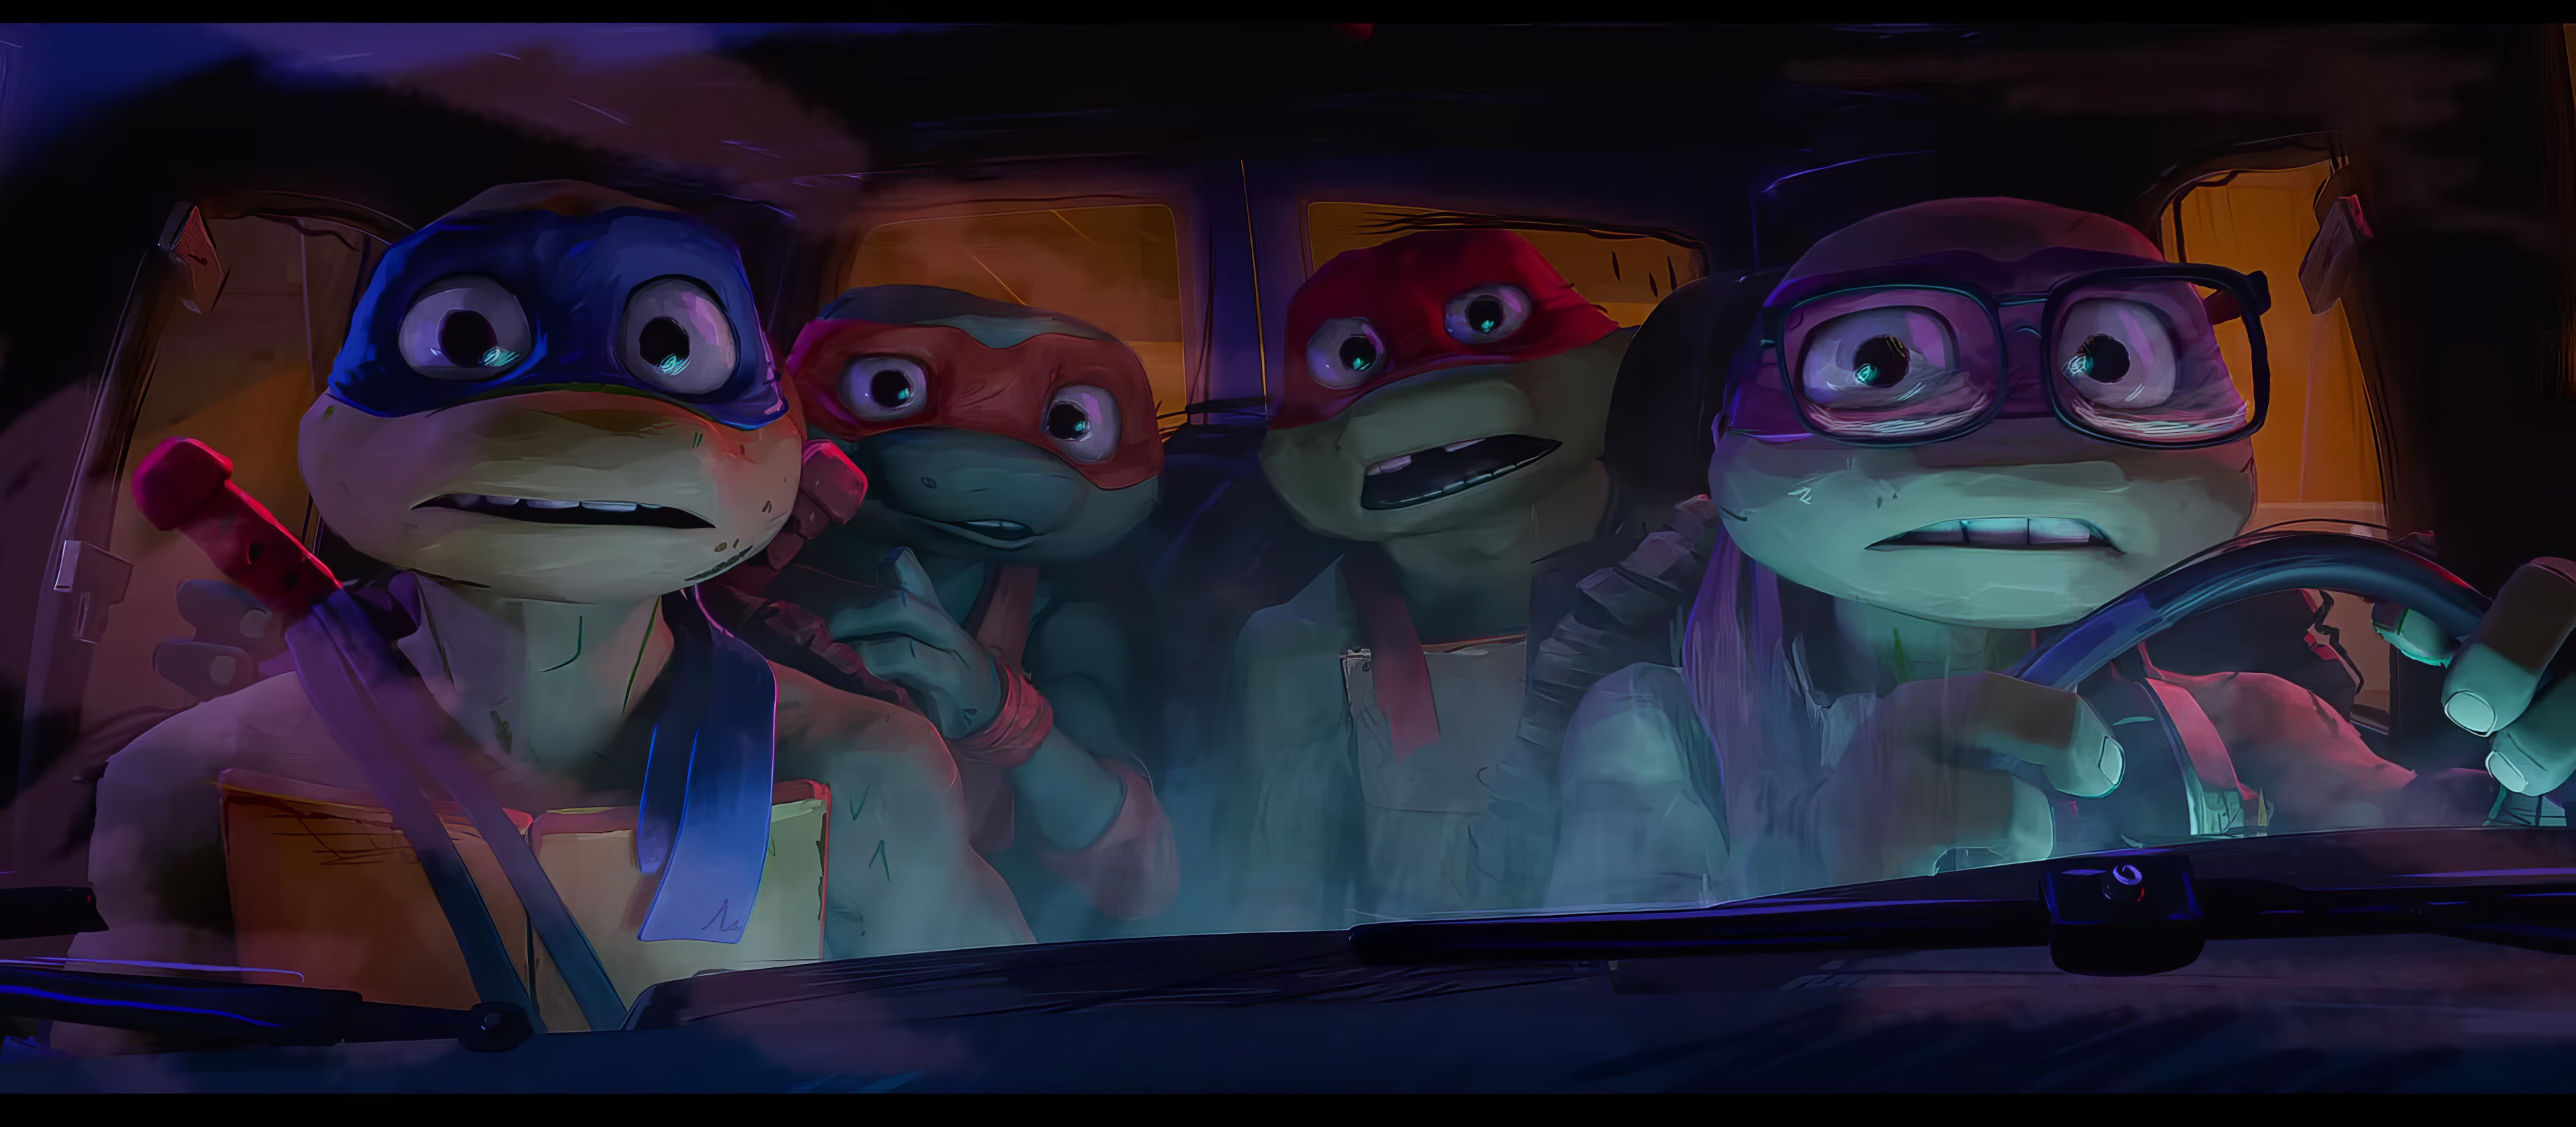 HD wallpaper featuring the Teenage Mutant Ninja Turtles from Mutant Mayhem looking surprised in a colorful, high-resolution desktop background.